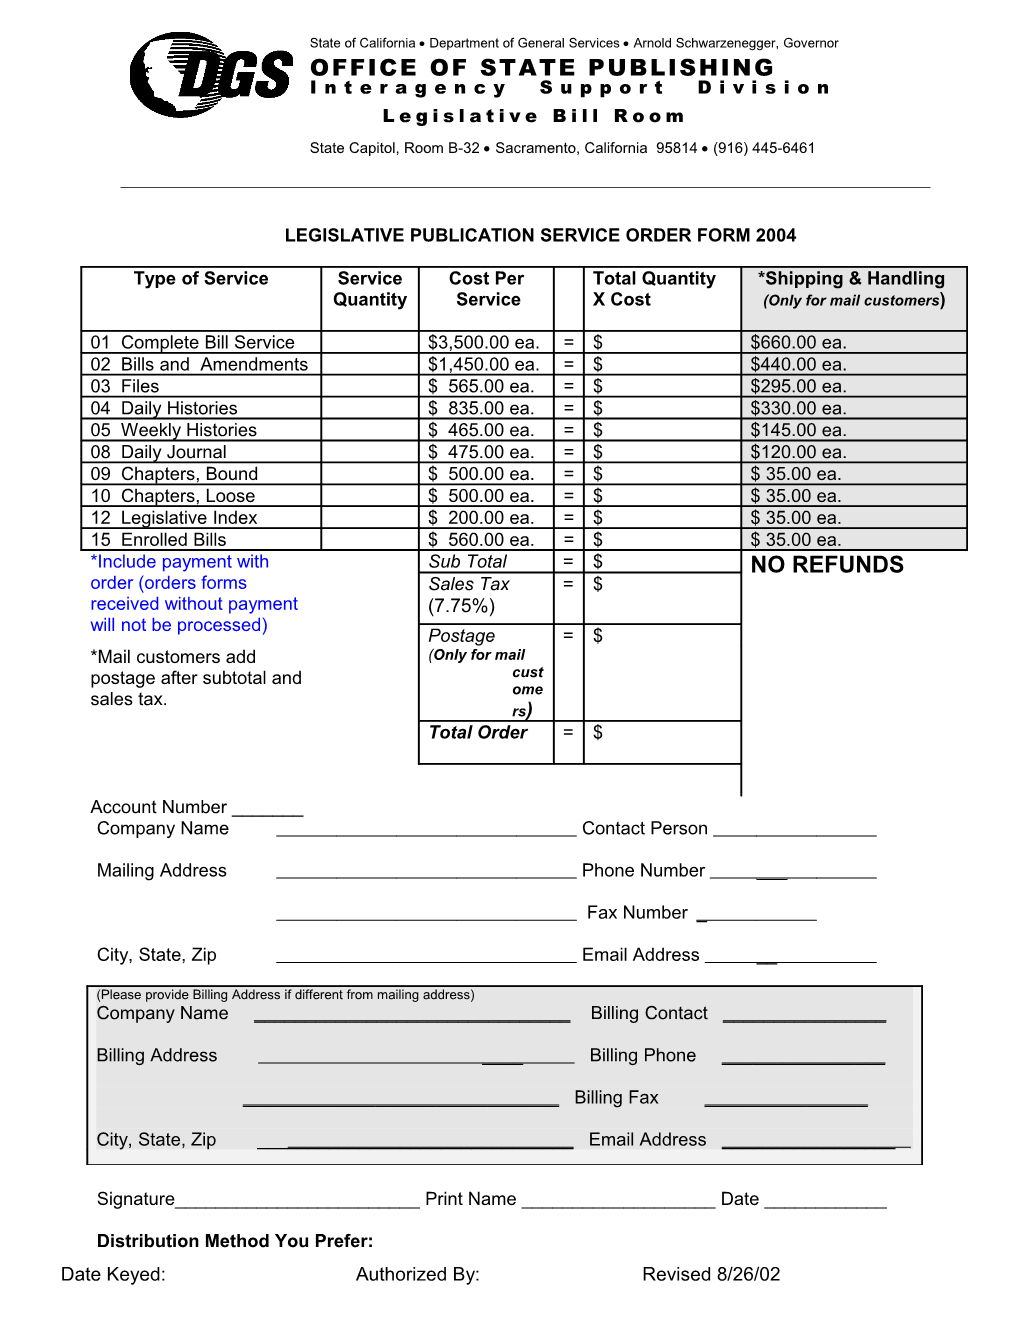 Legislative Publication Service Order Form 2004